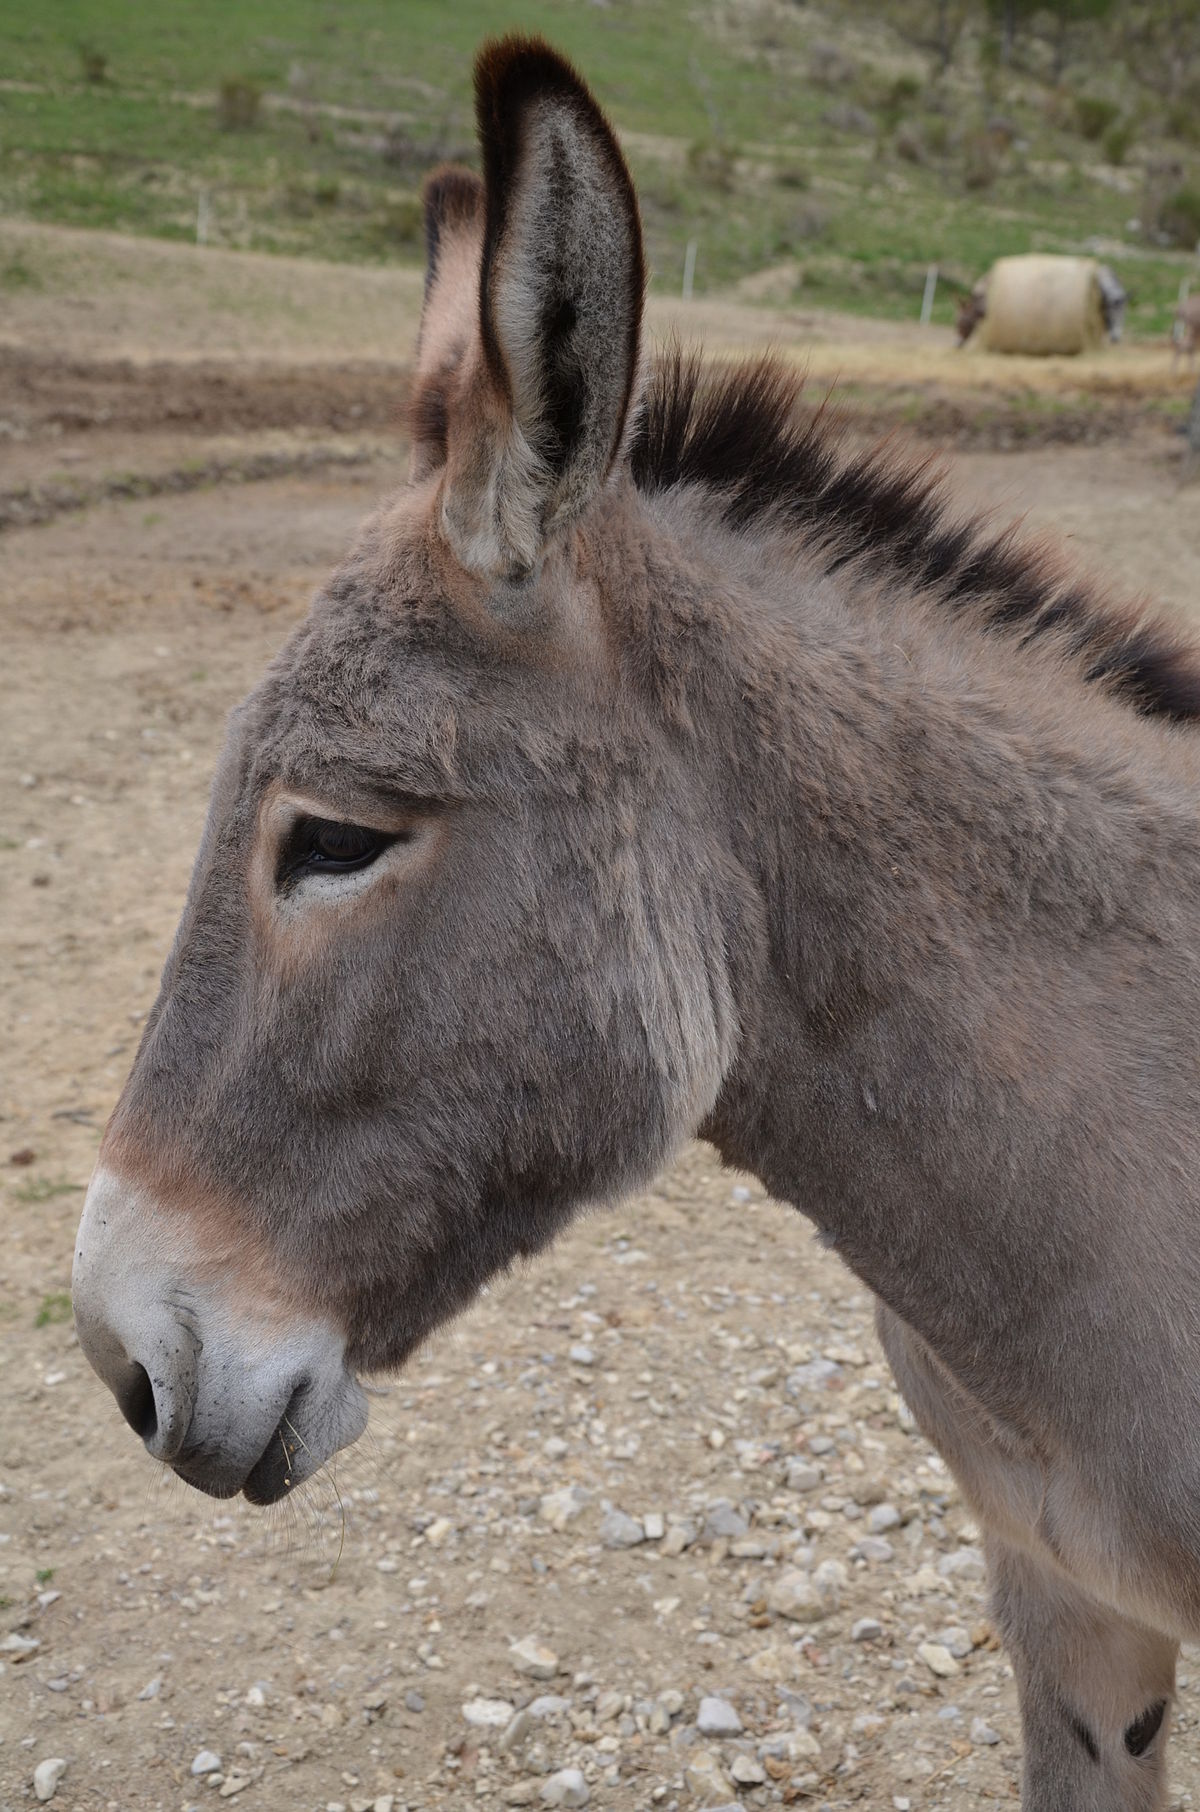 Provence Donkey - Wikipedia